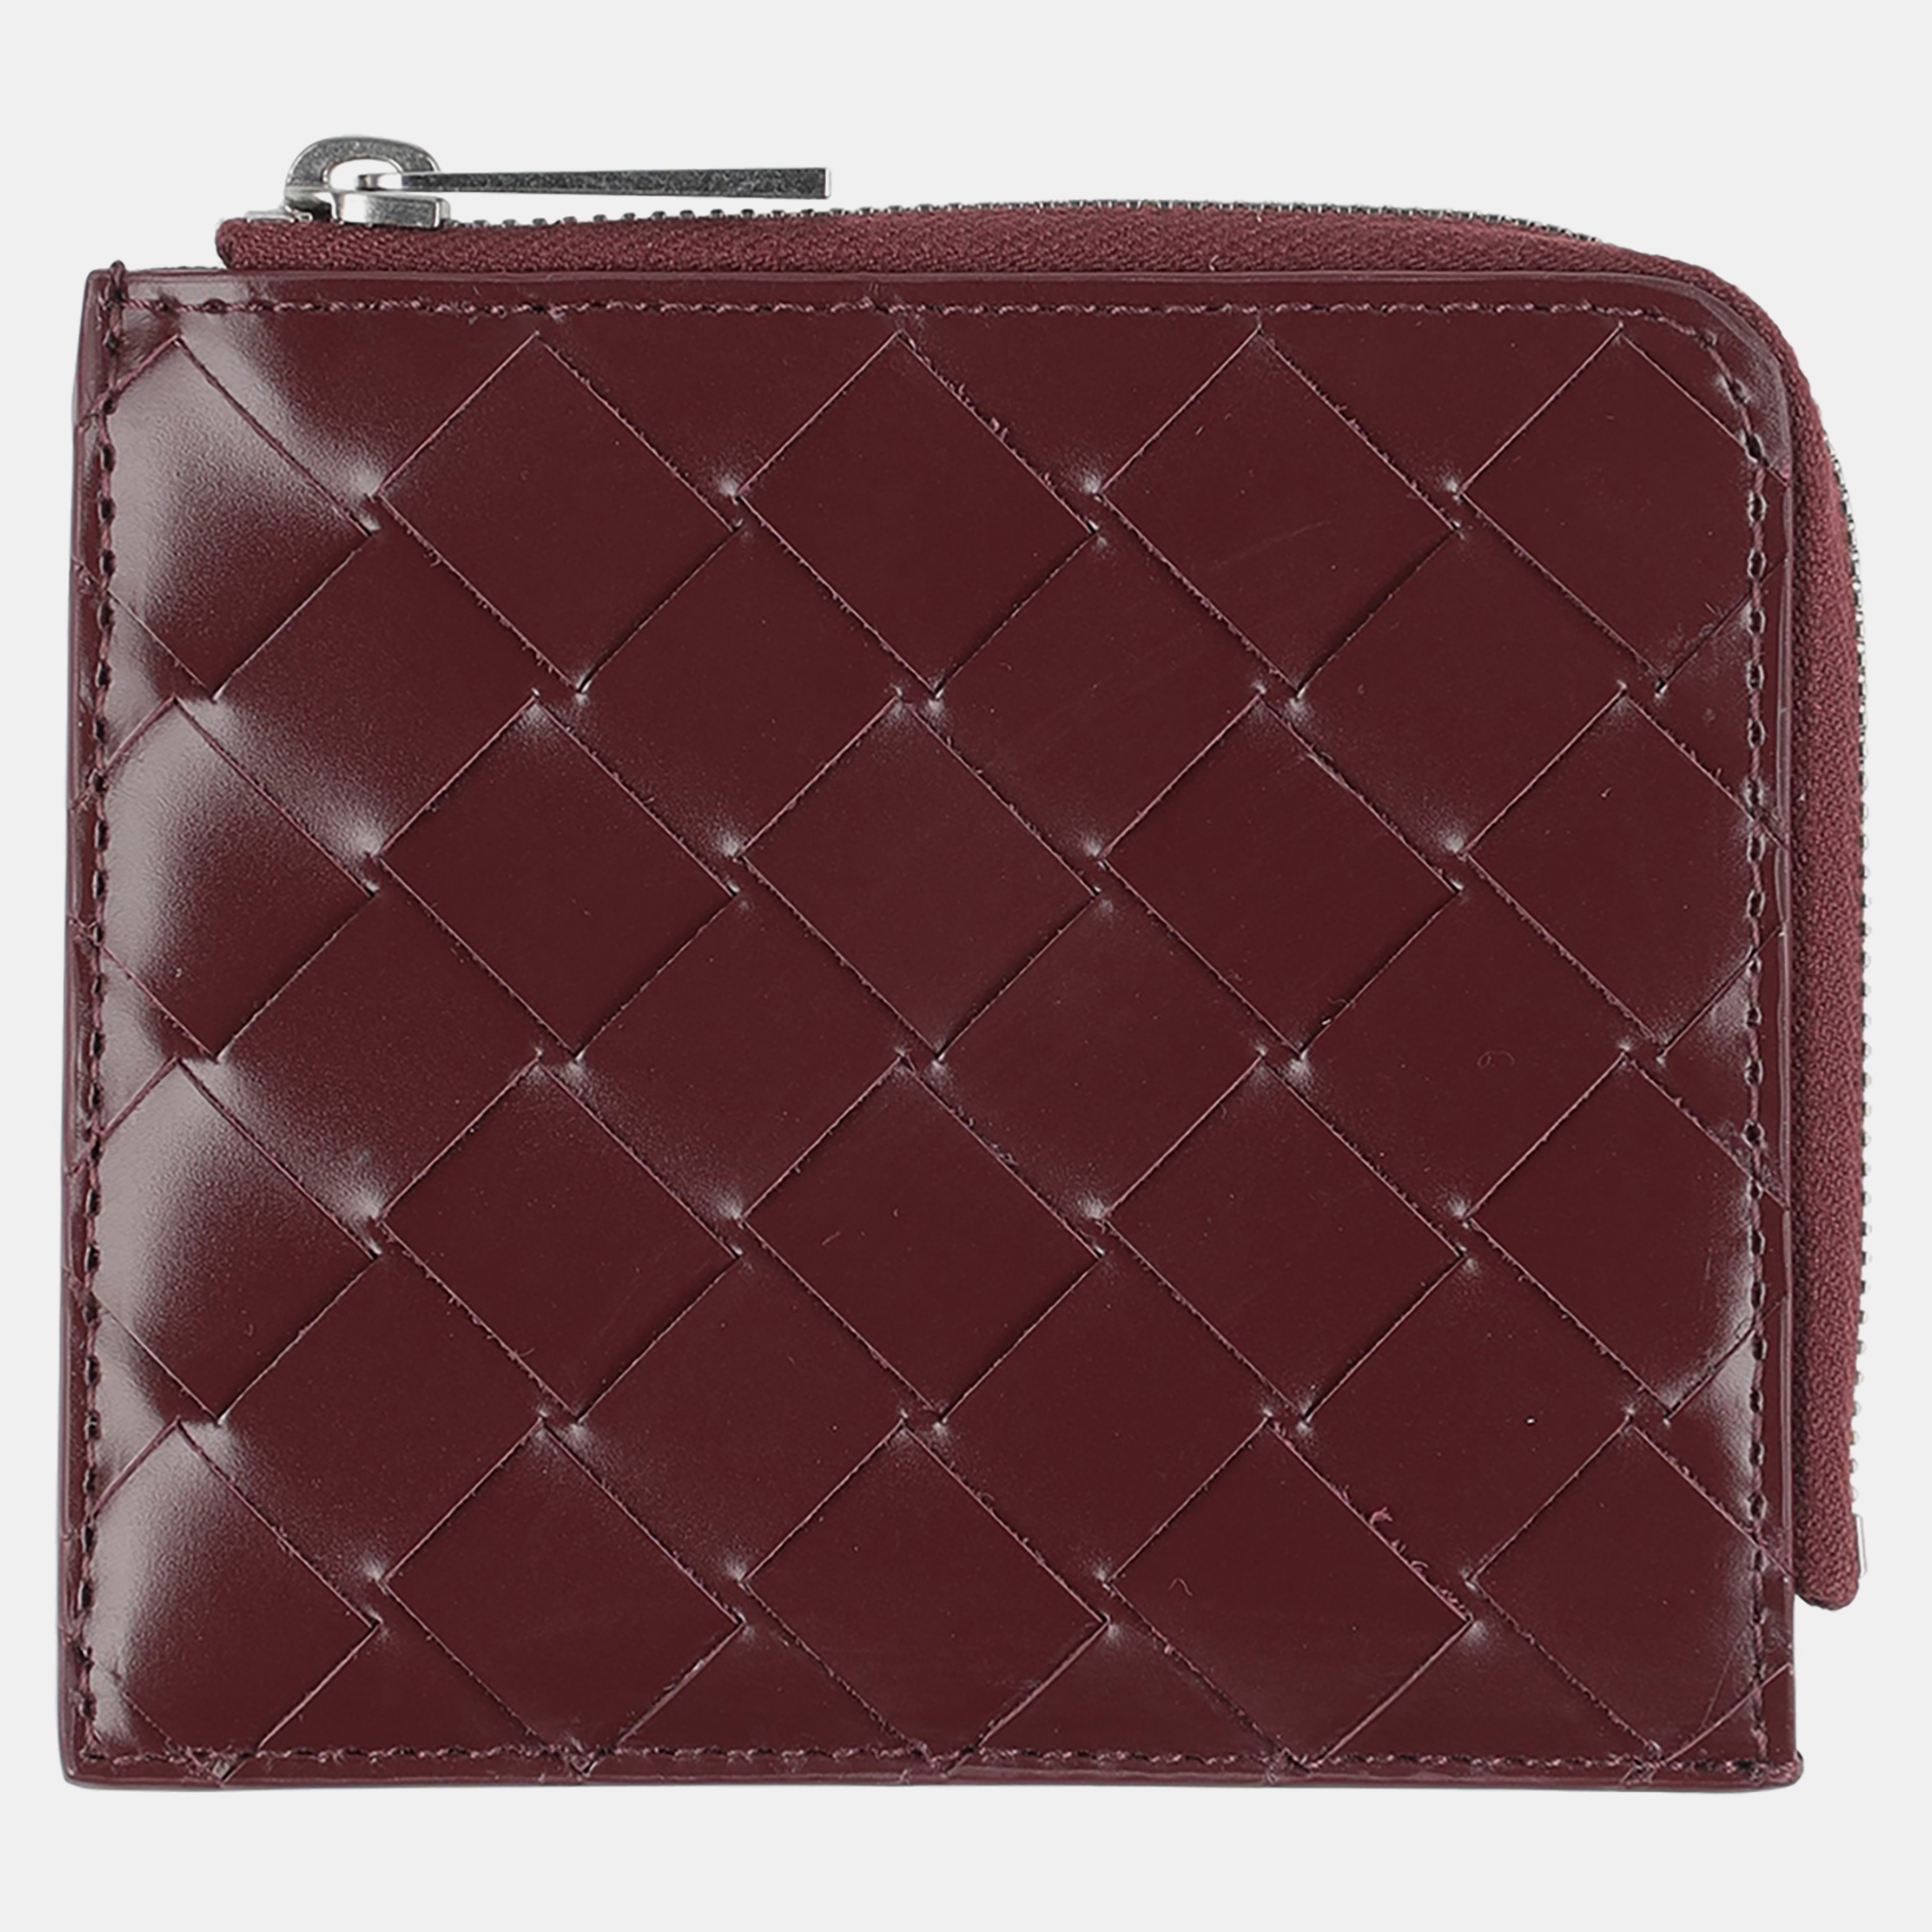 Bottega veneta burgundy intrecciato leather coin purse